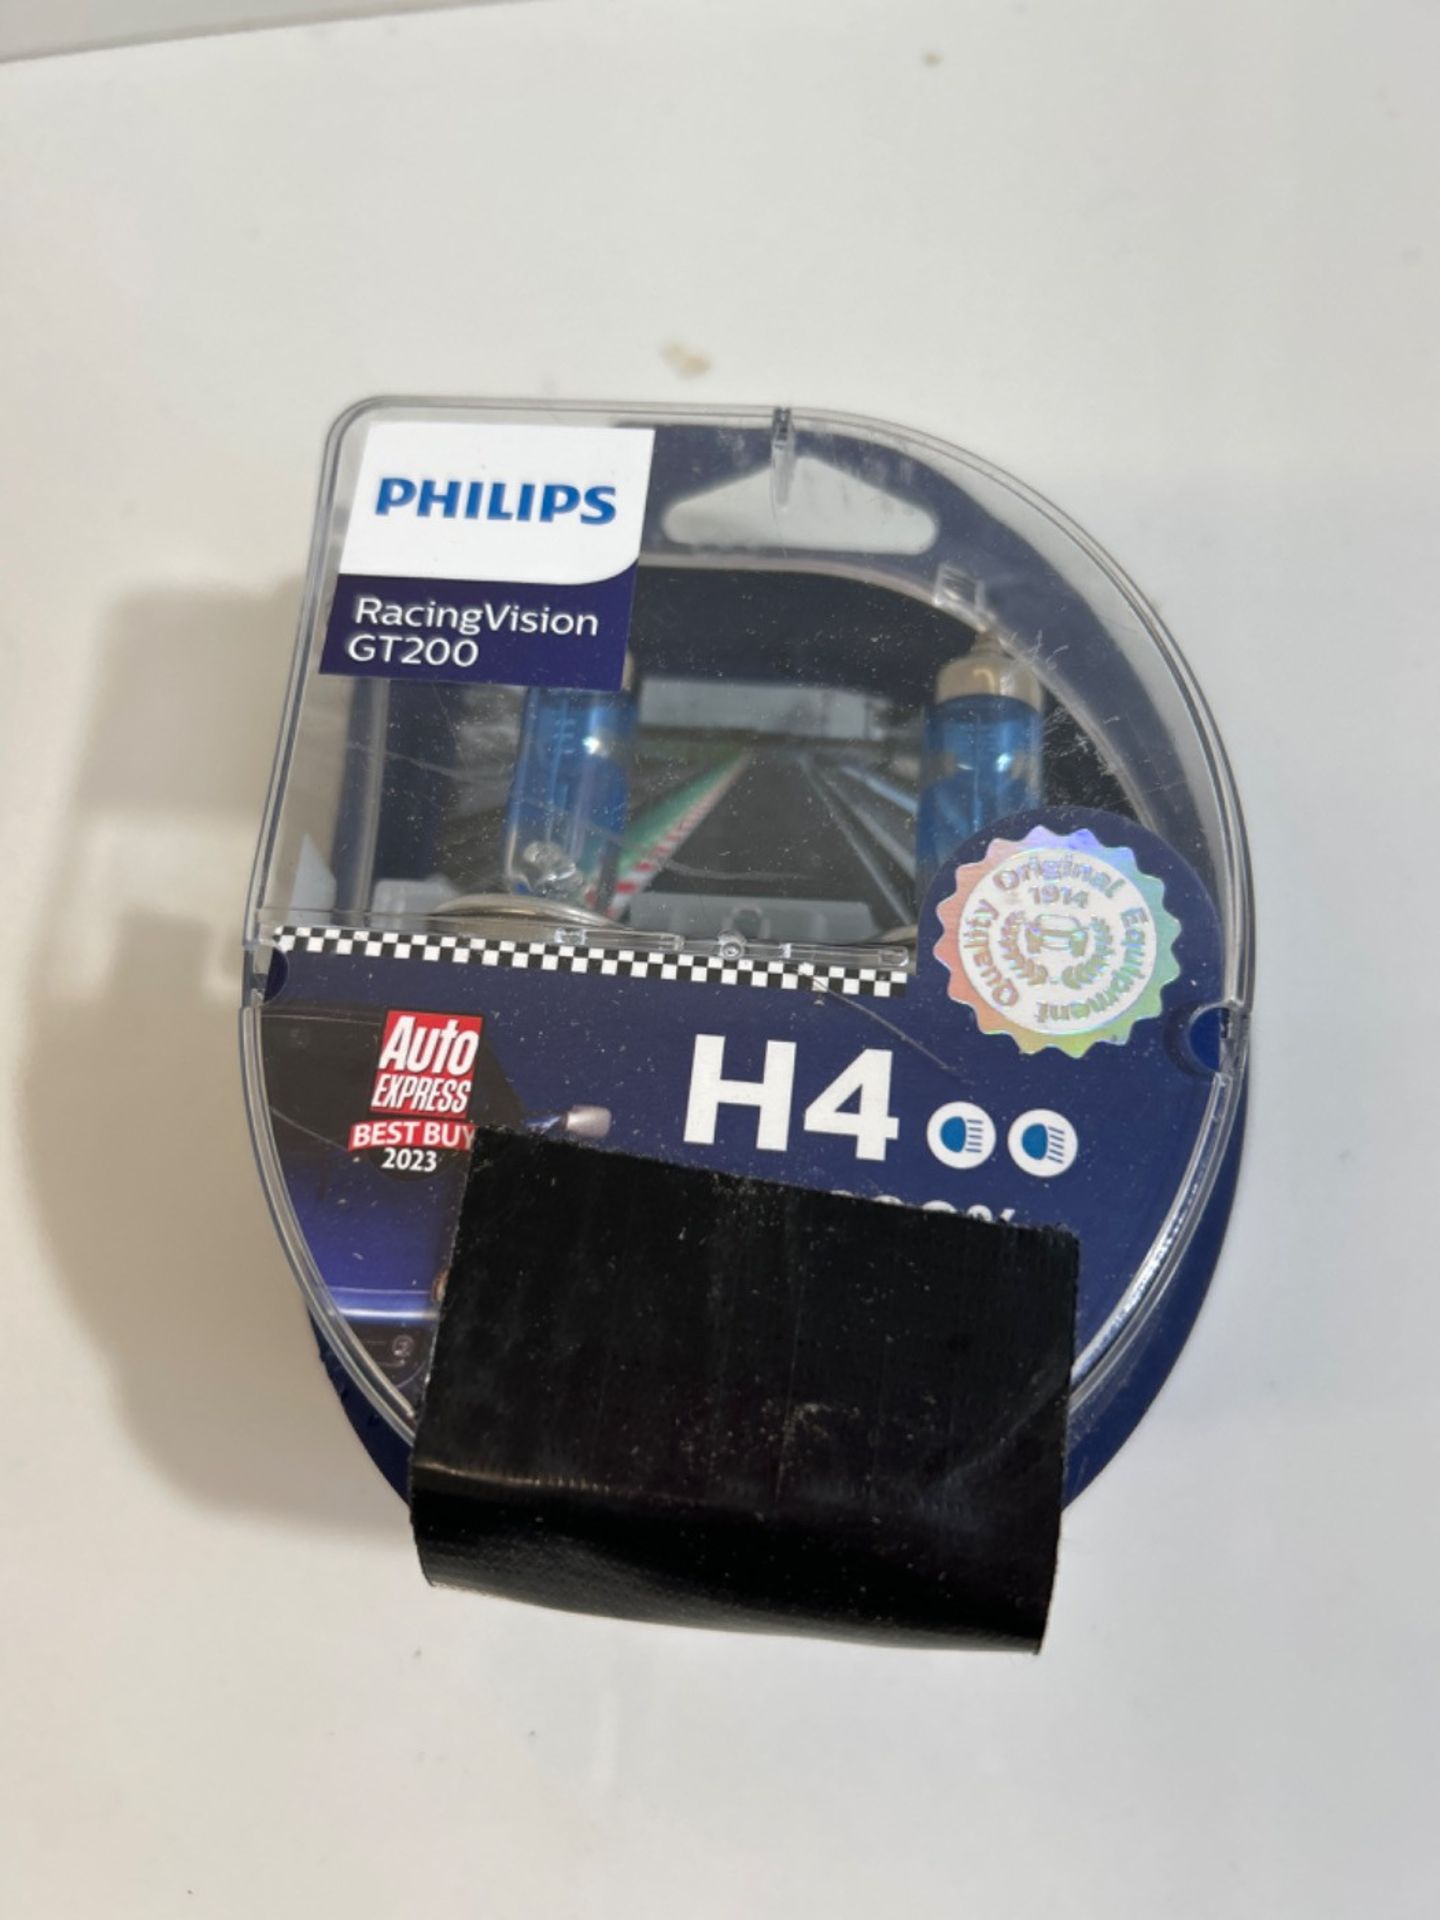 Philips 575528 Racingvision GT200 H4 Car Headlight Bulb +200%, Set of 2 - Image 2 of 2